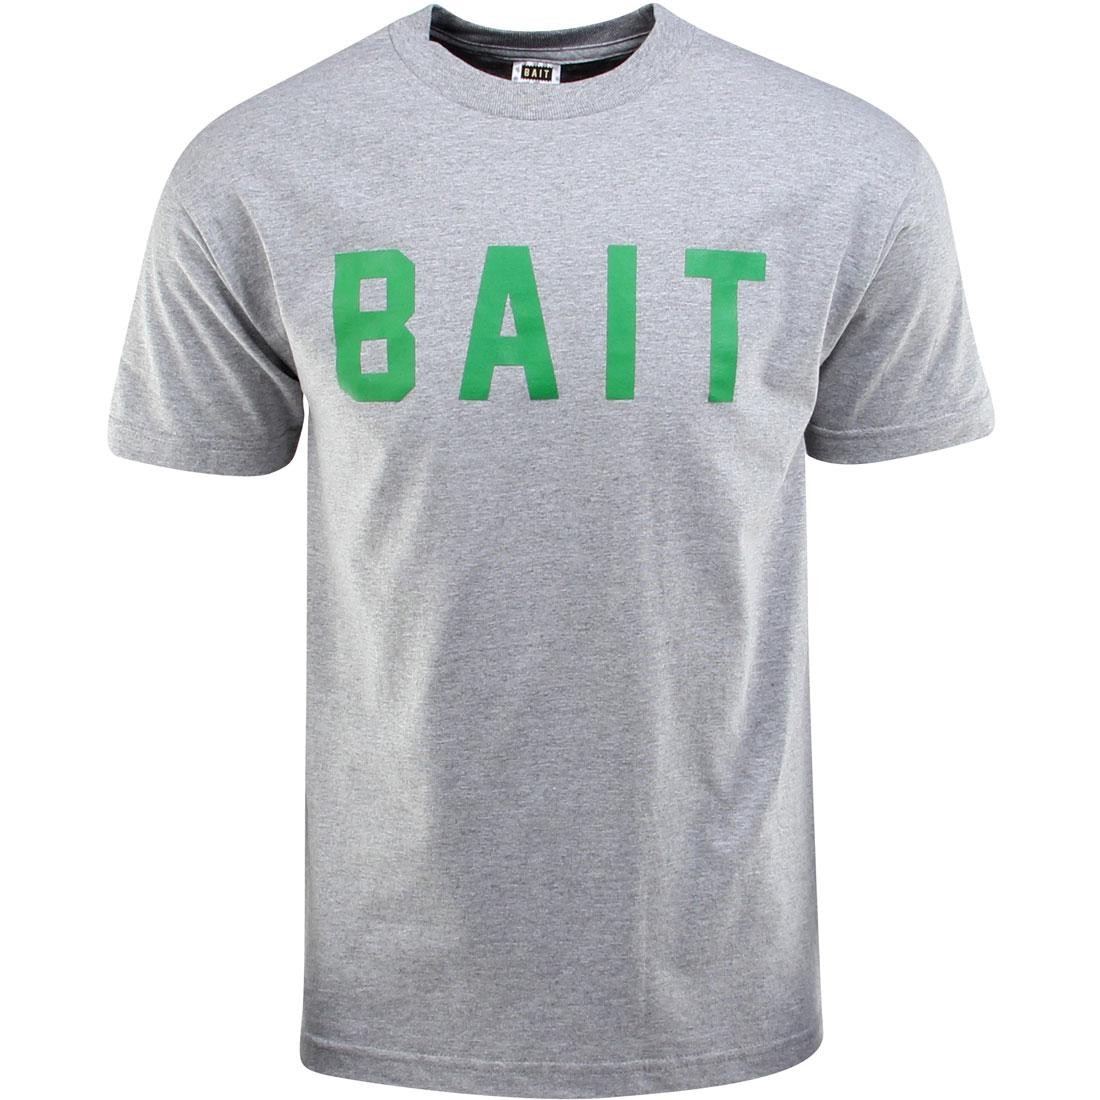 BAIT Logo Tee (gray / heather gray / green)